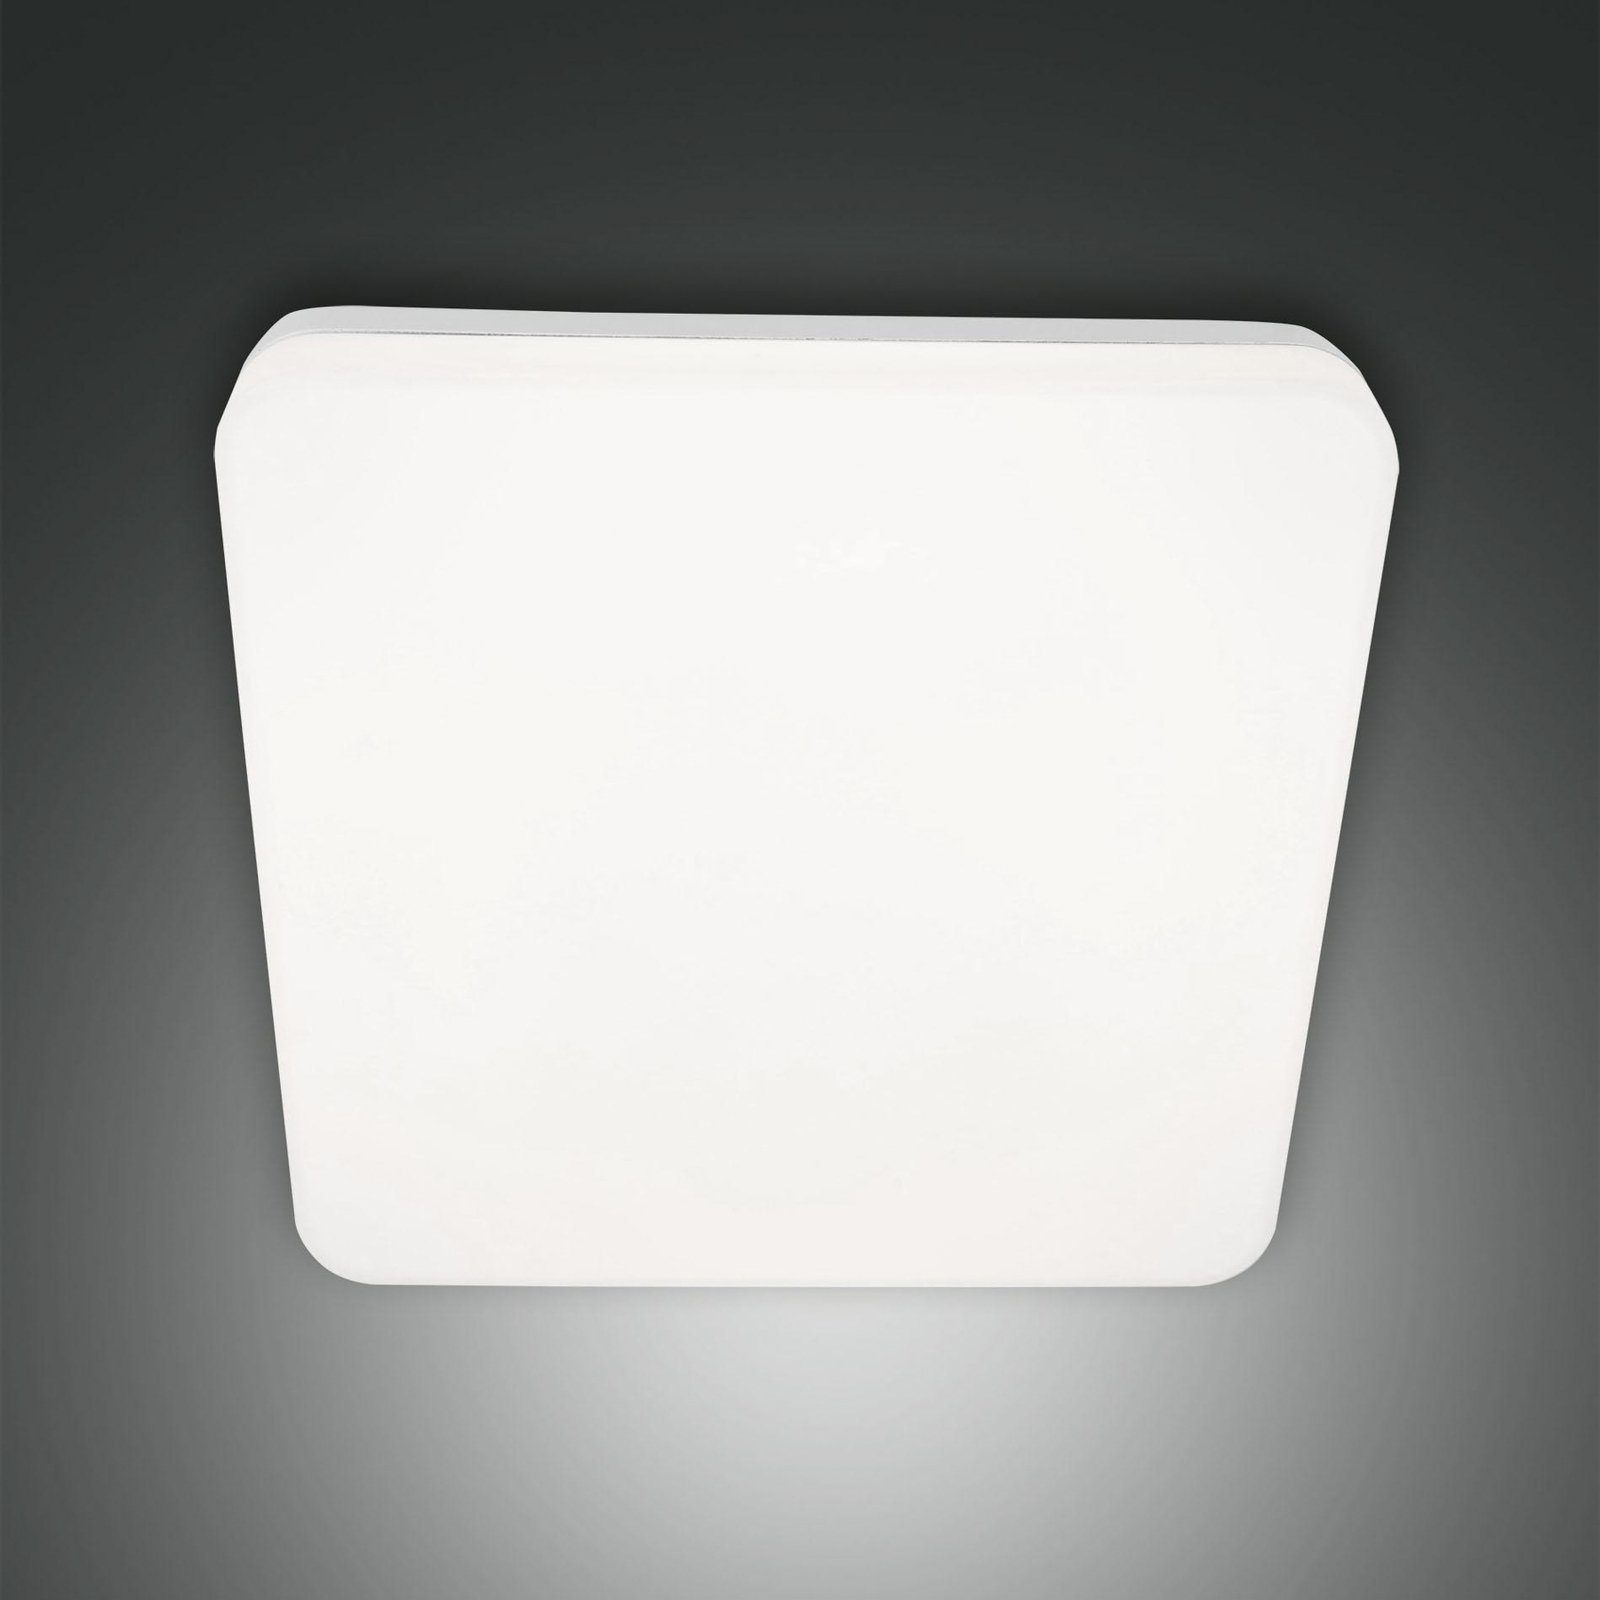 "Folk" LED lauko lubinis šviestuvas, jutiklis, 28 x 28 cm, baltas, IP65